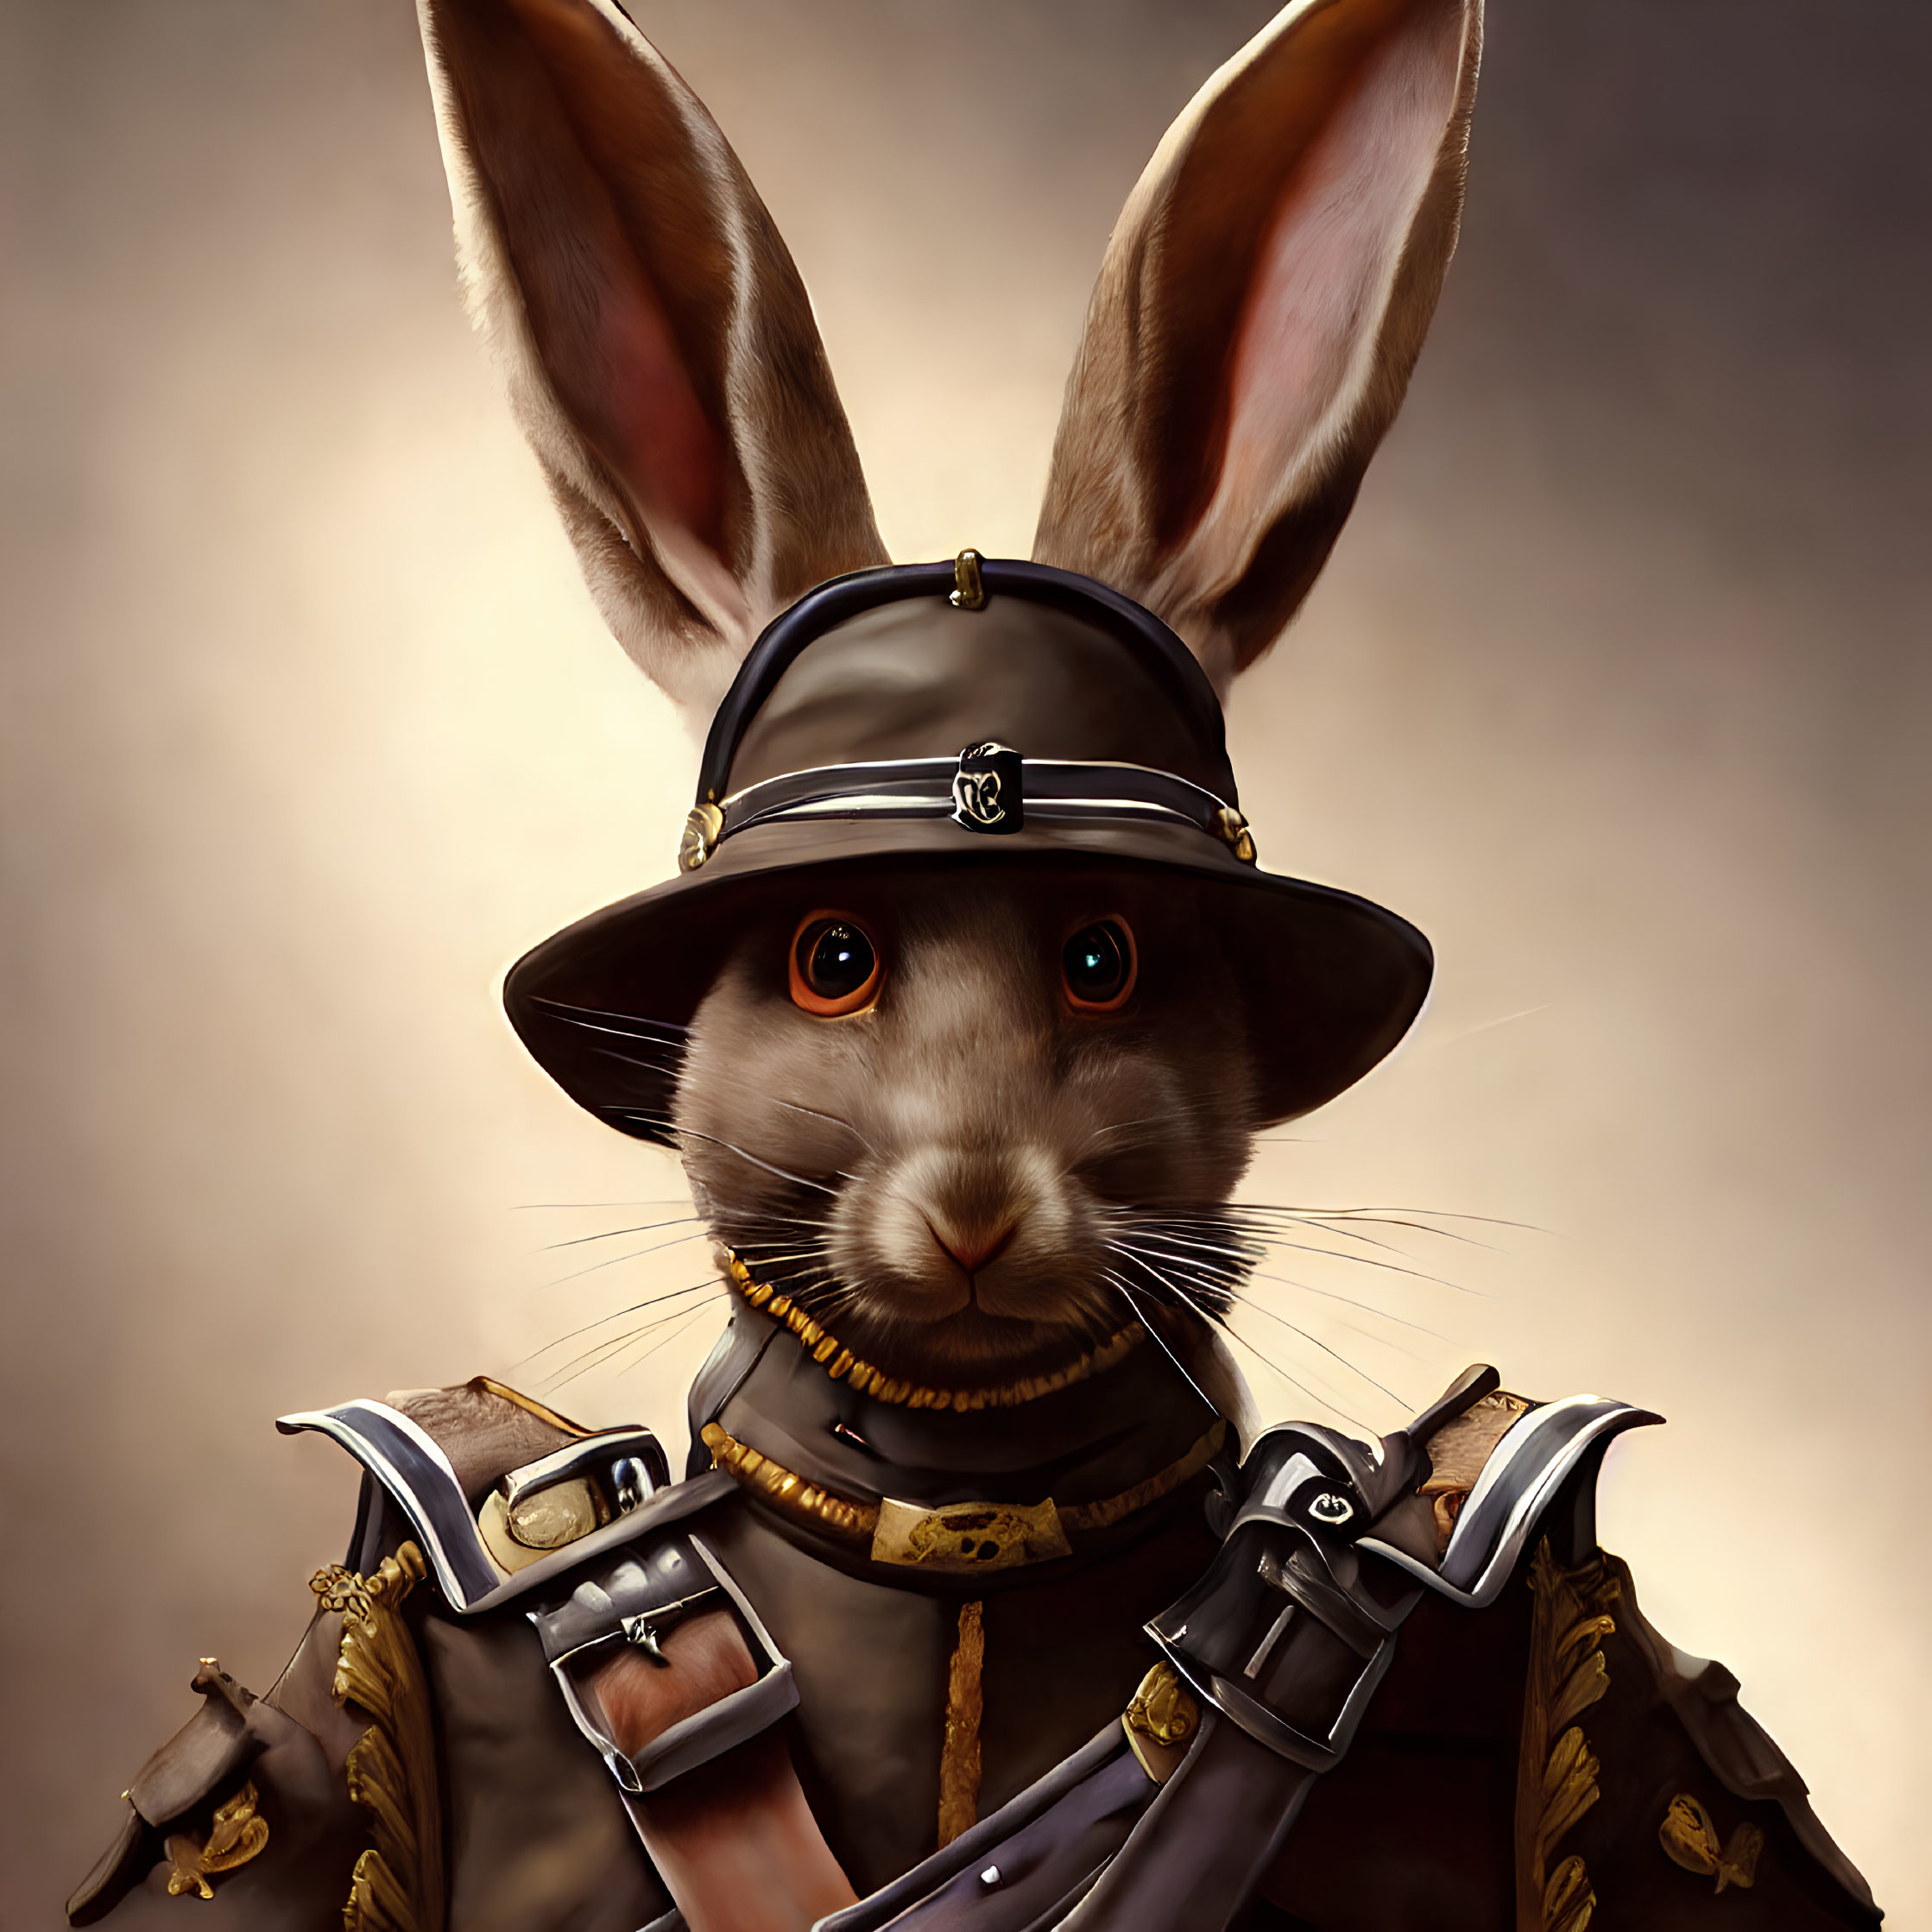 Anthropomorphic rabbit in military uniform with sword